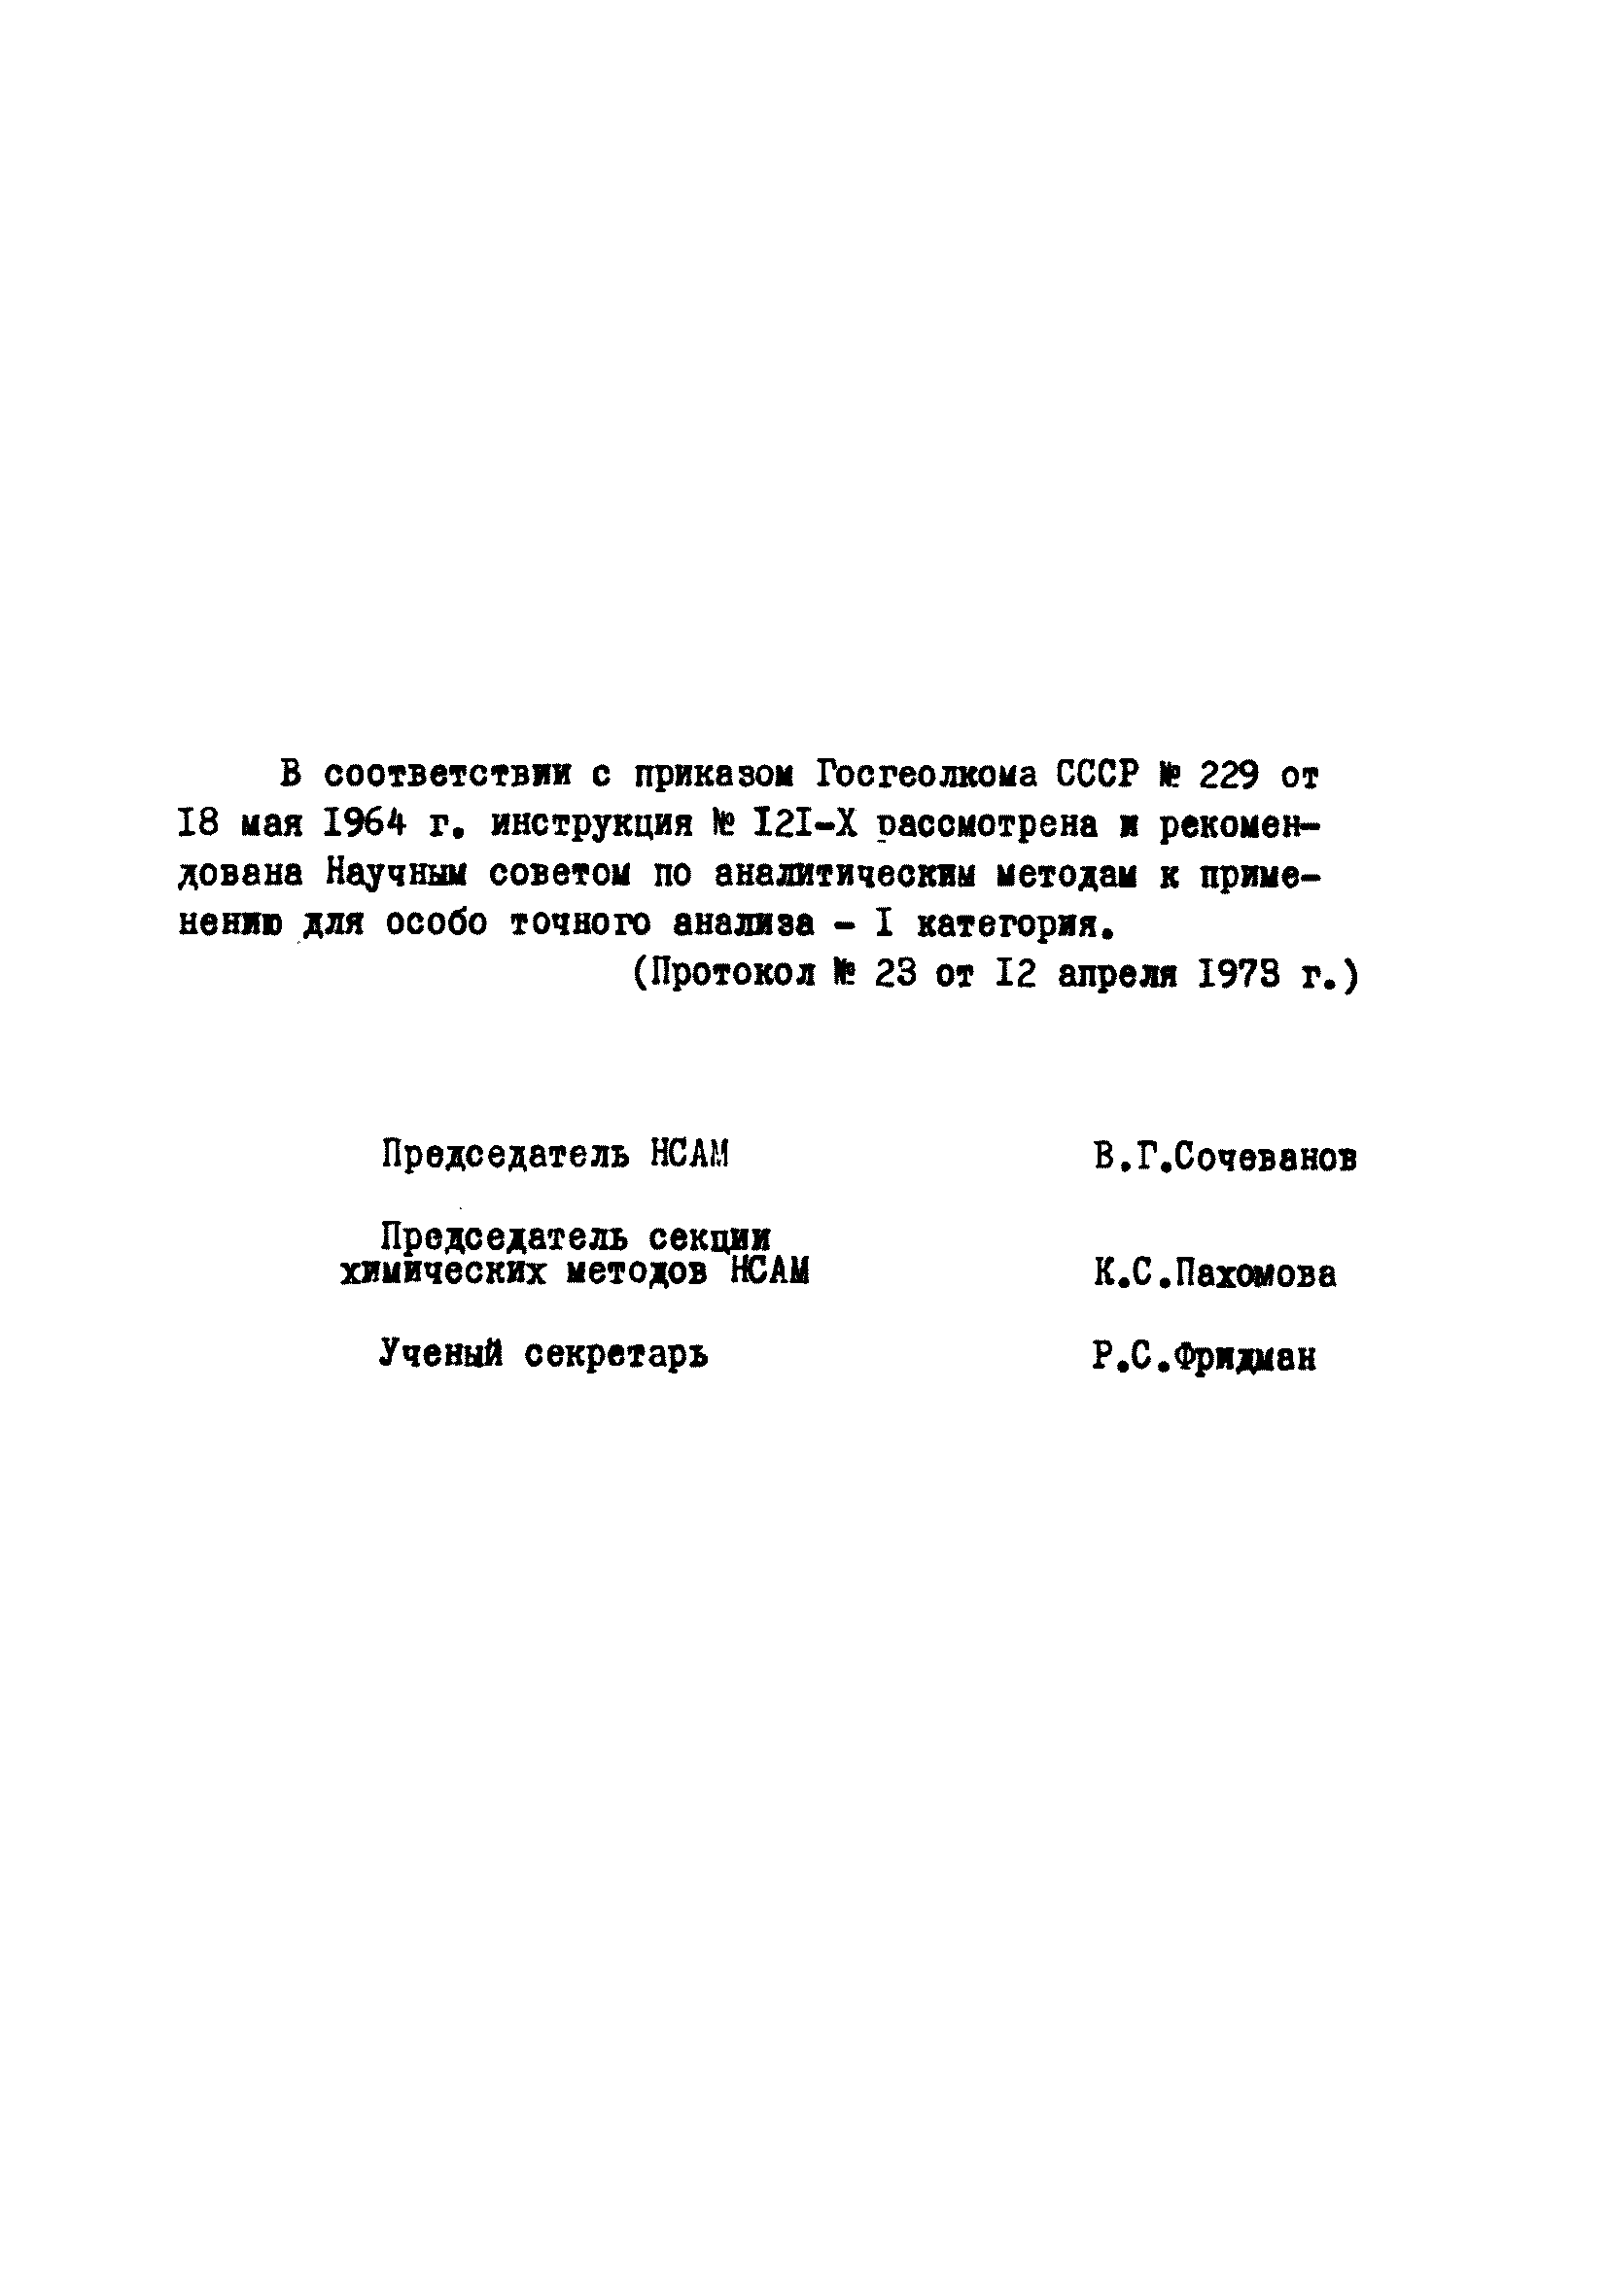 Инструкция НСАМ 121-Х